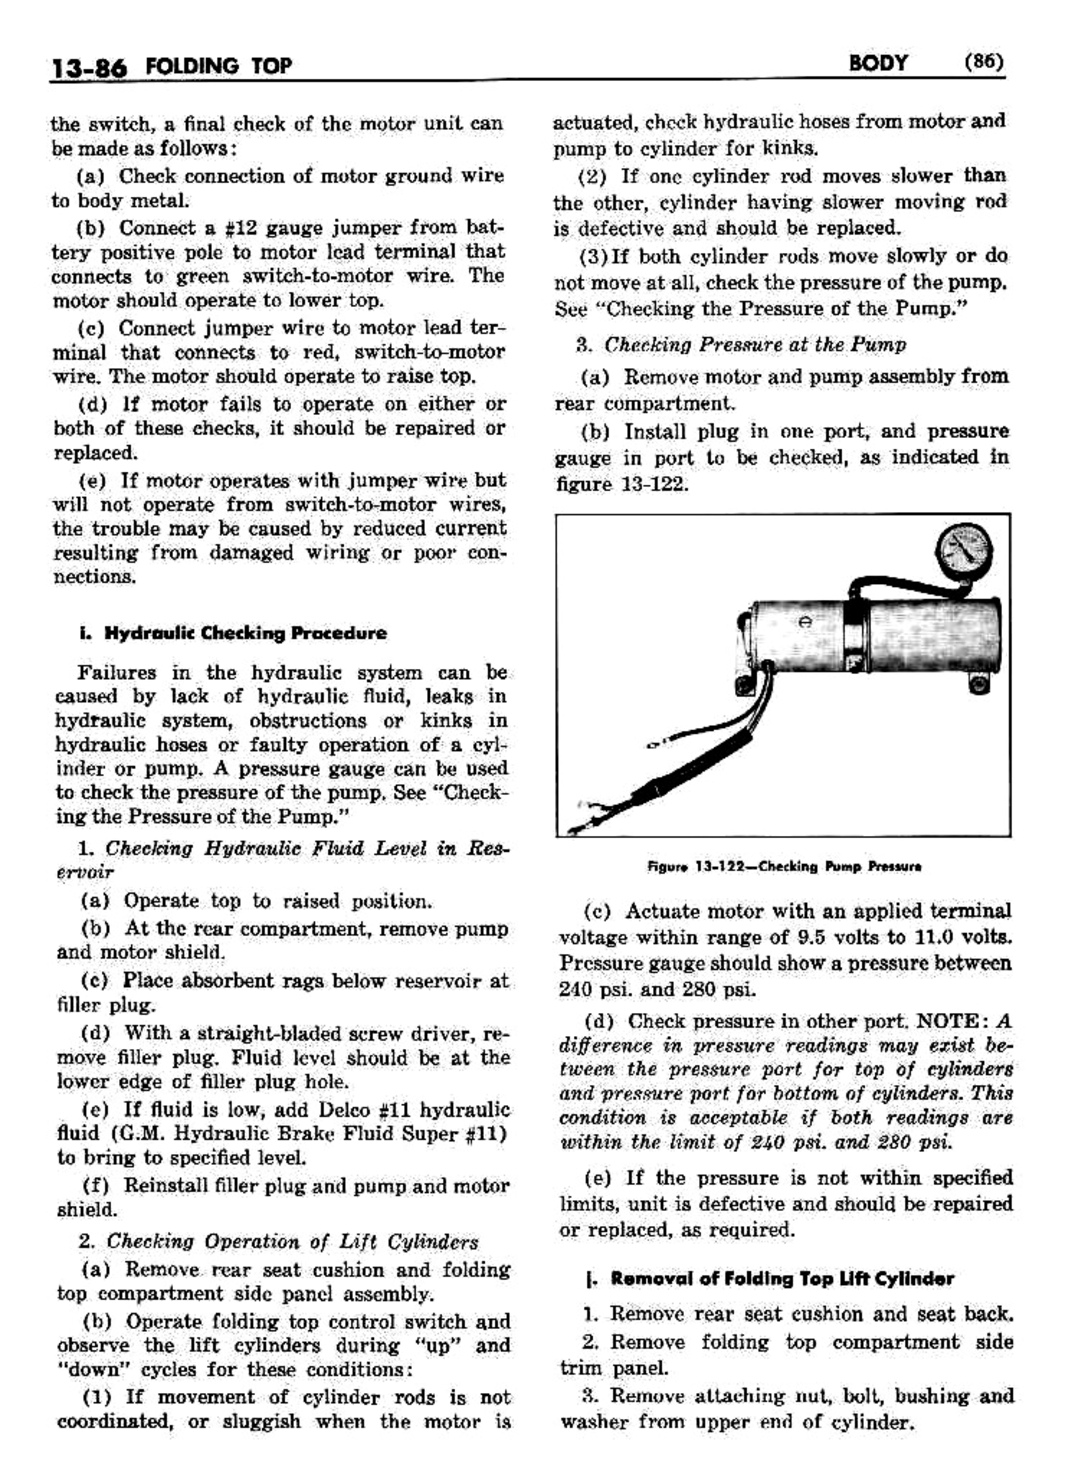 n_1958 Buick Body Service Manual-087-087.jpg